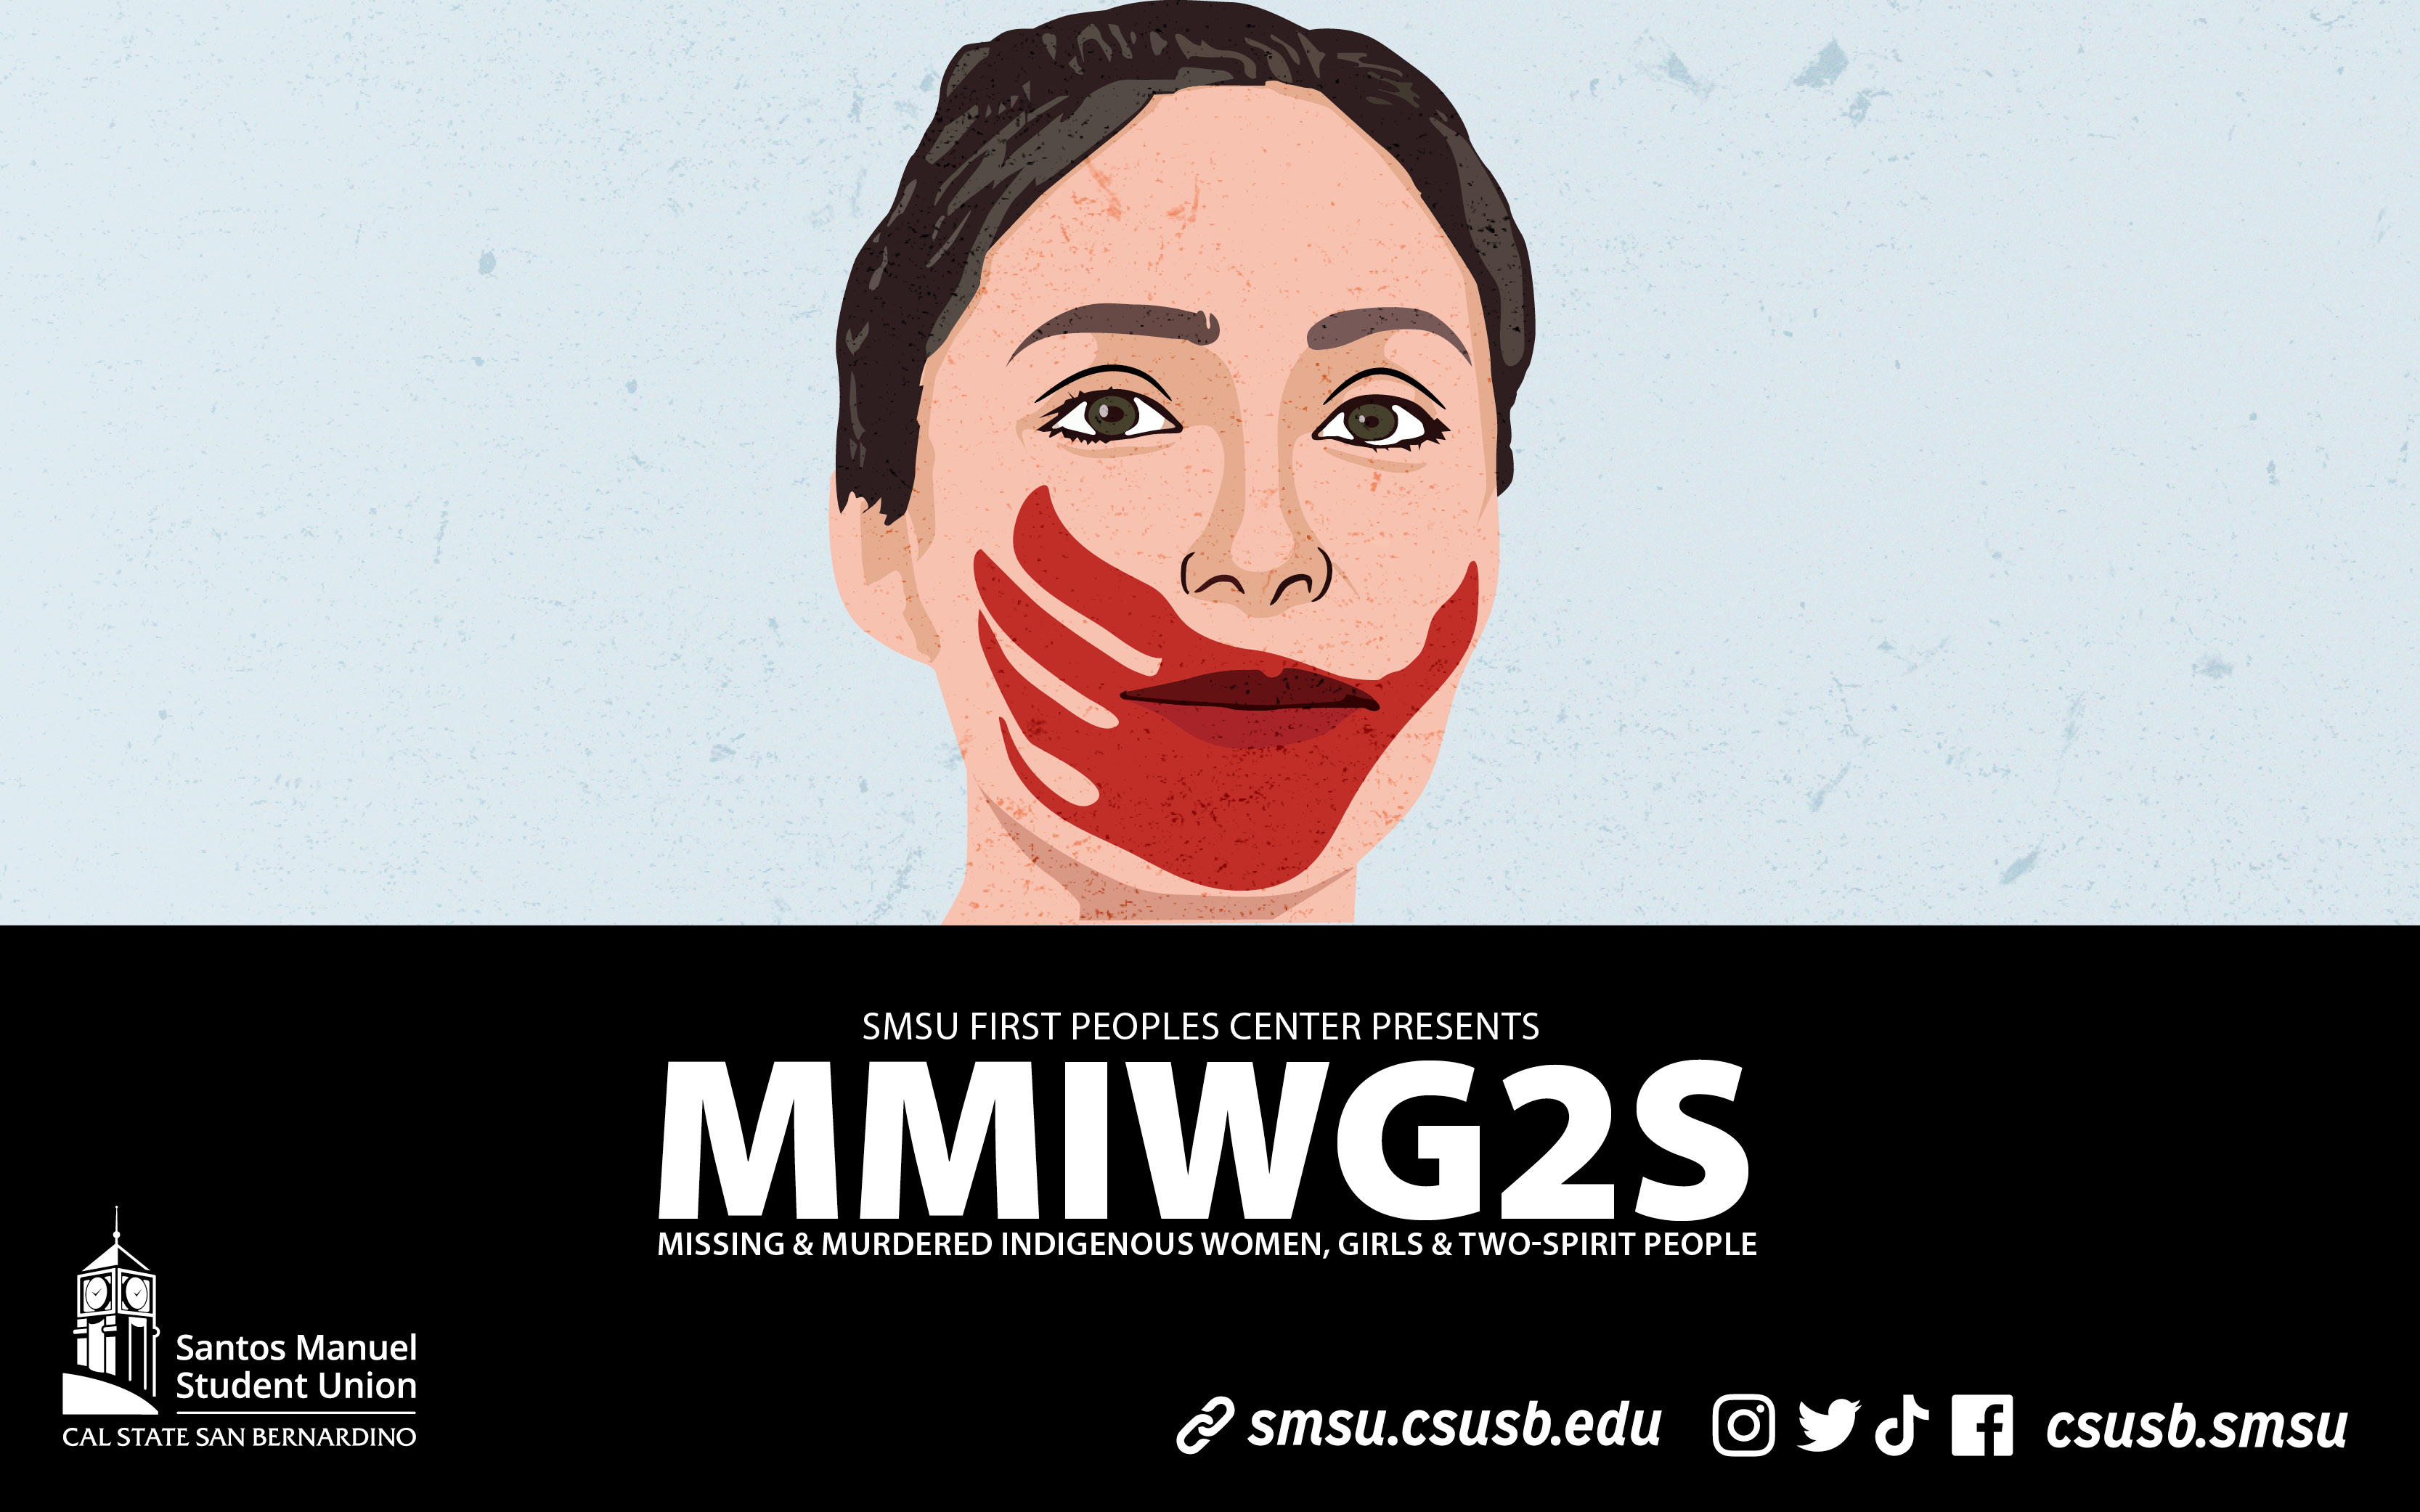 MMIWG2S: Missing & Murdered Indigenous Women. Girls, & Two-Spirit People